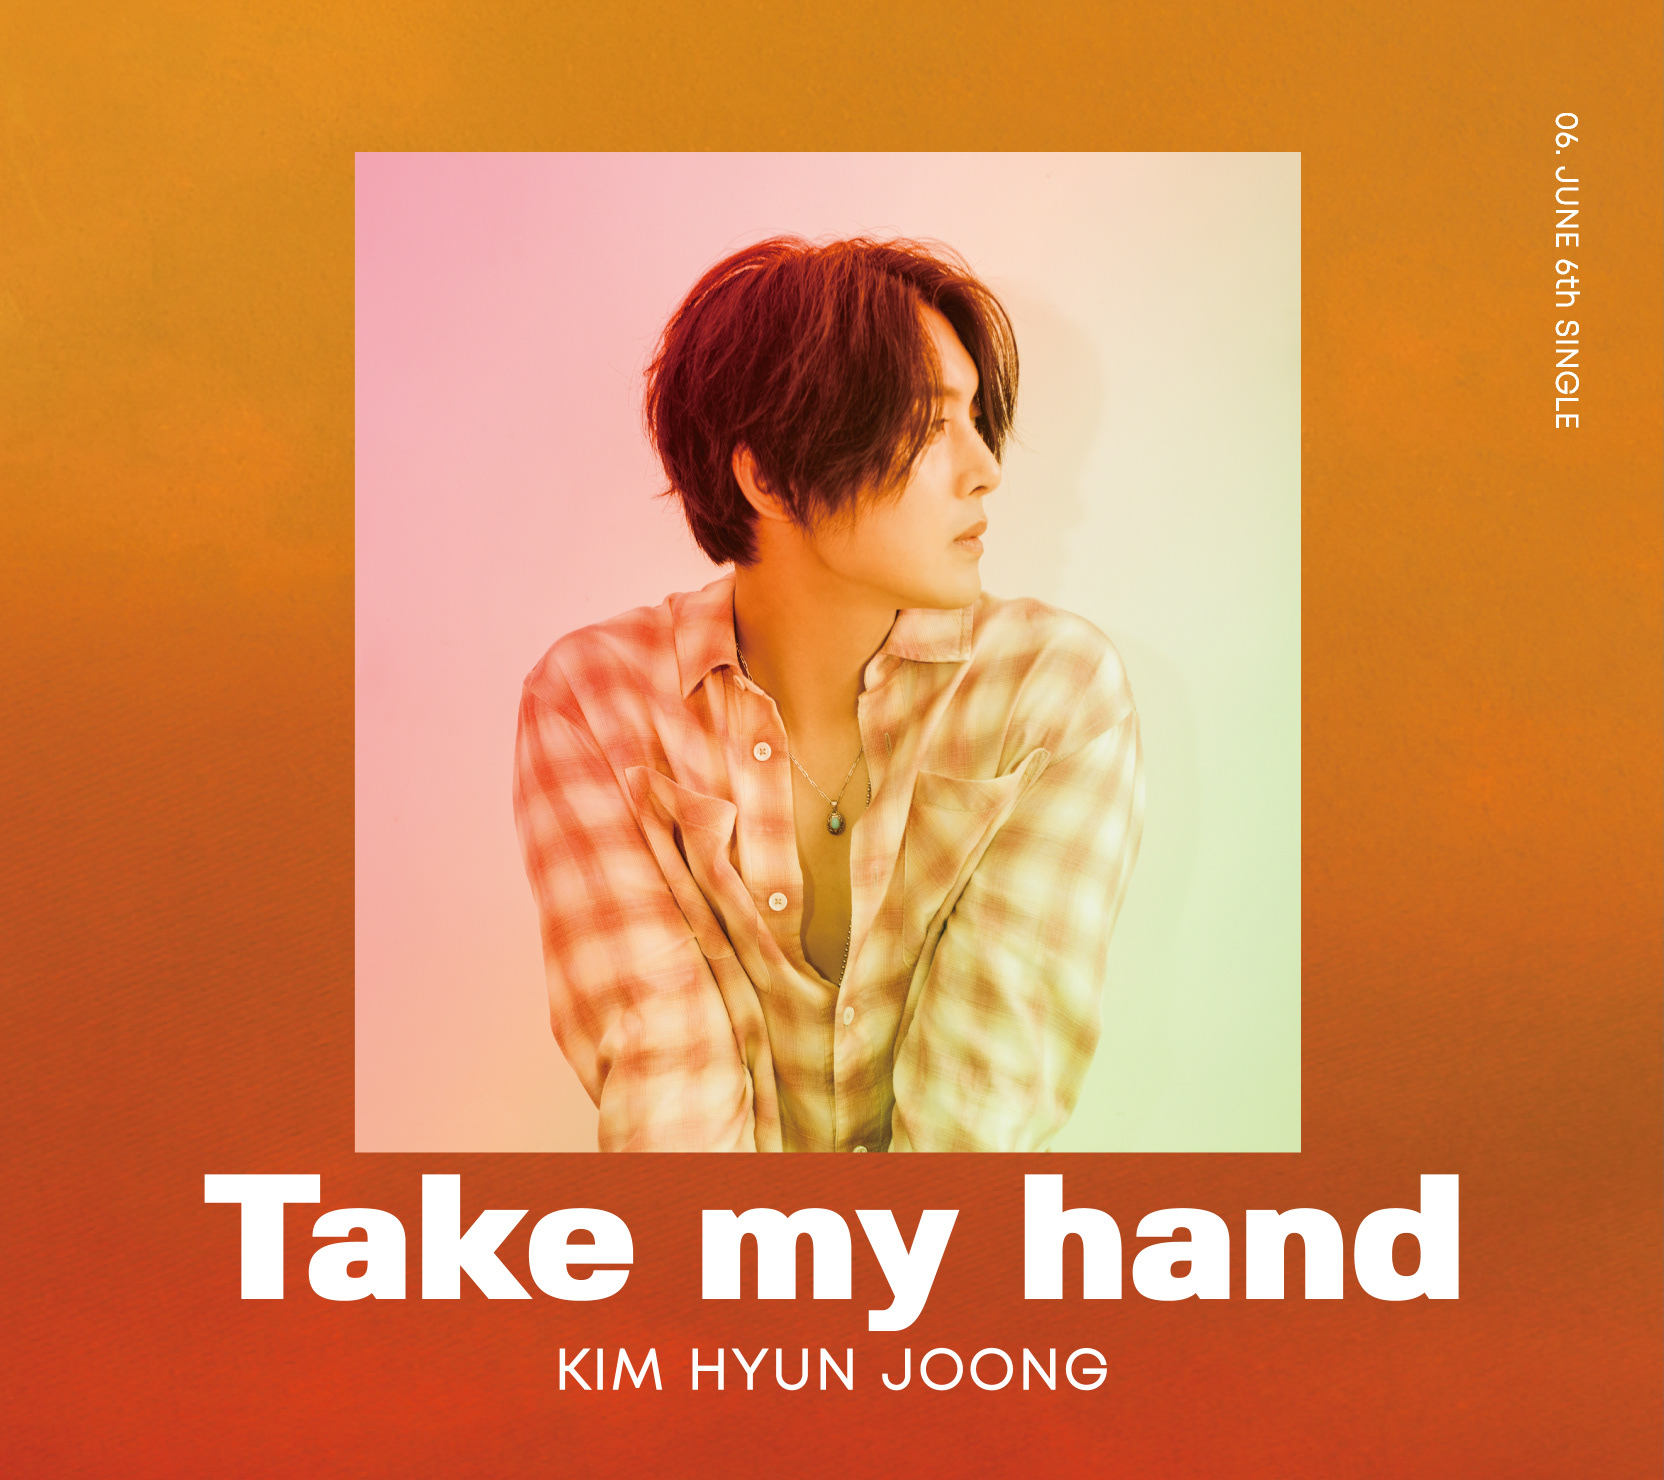 Resultado de imagen para kim hyun joong take my hand